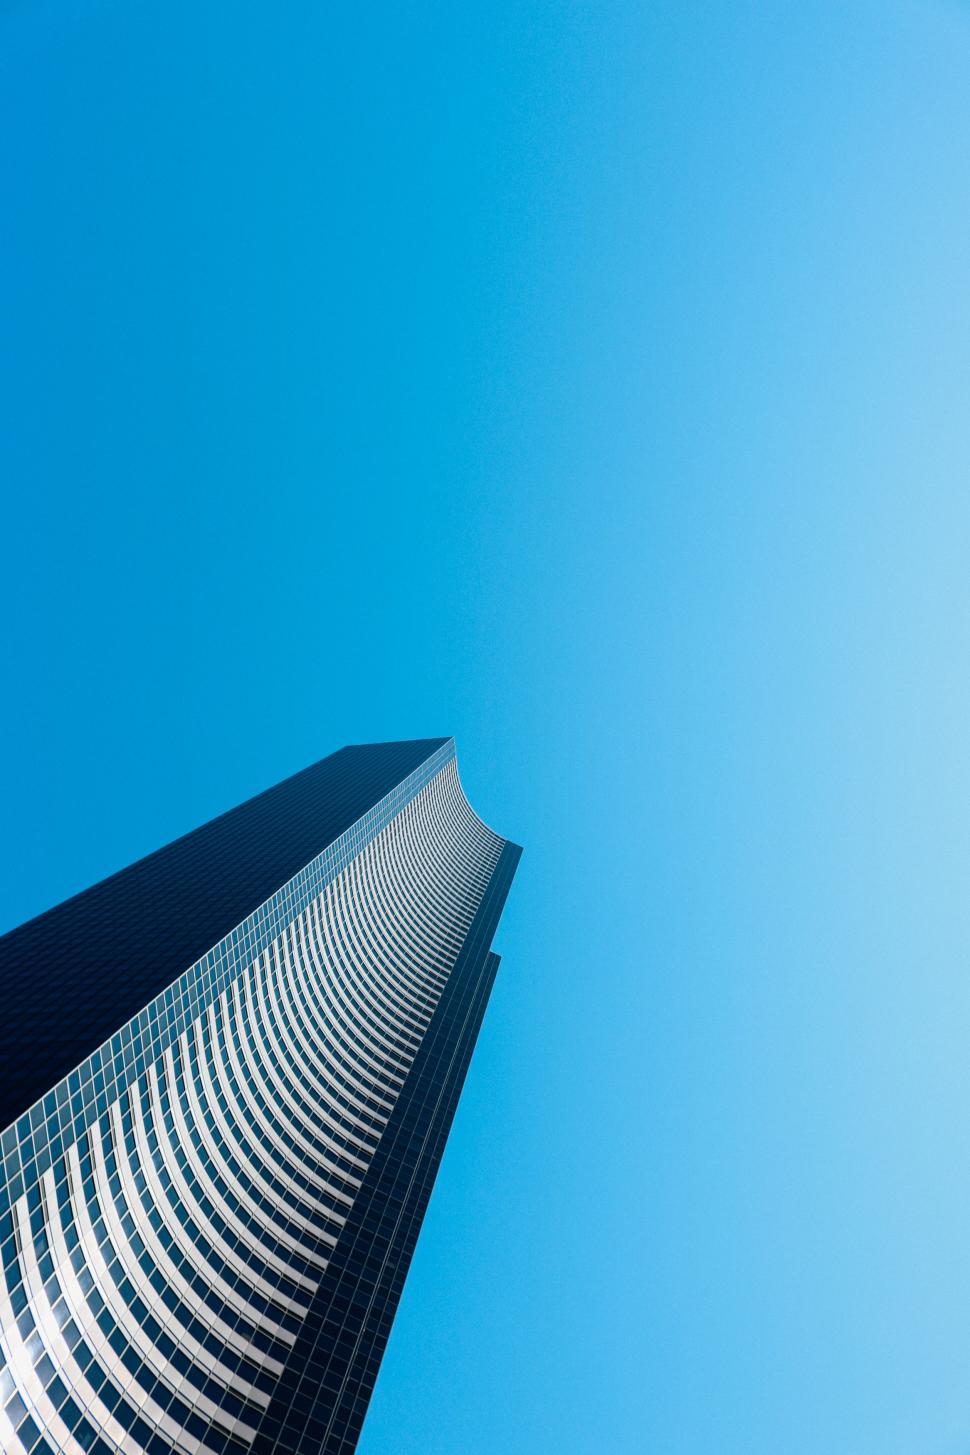 Free Image of Modern High-Rise Building - Seattle, Washington 